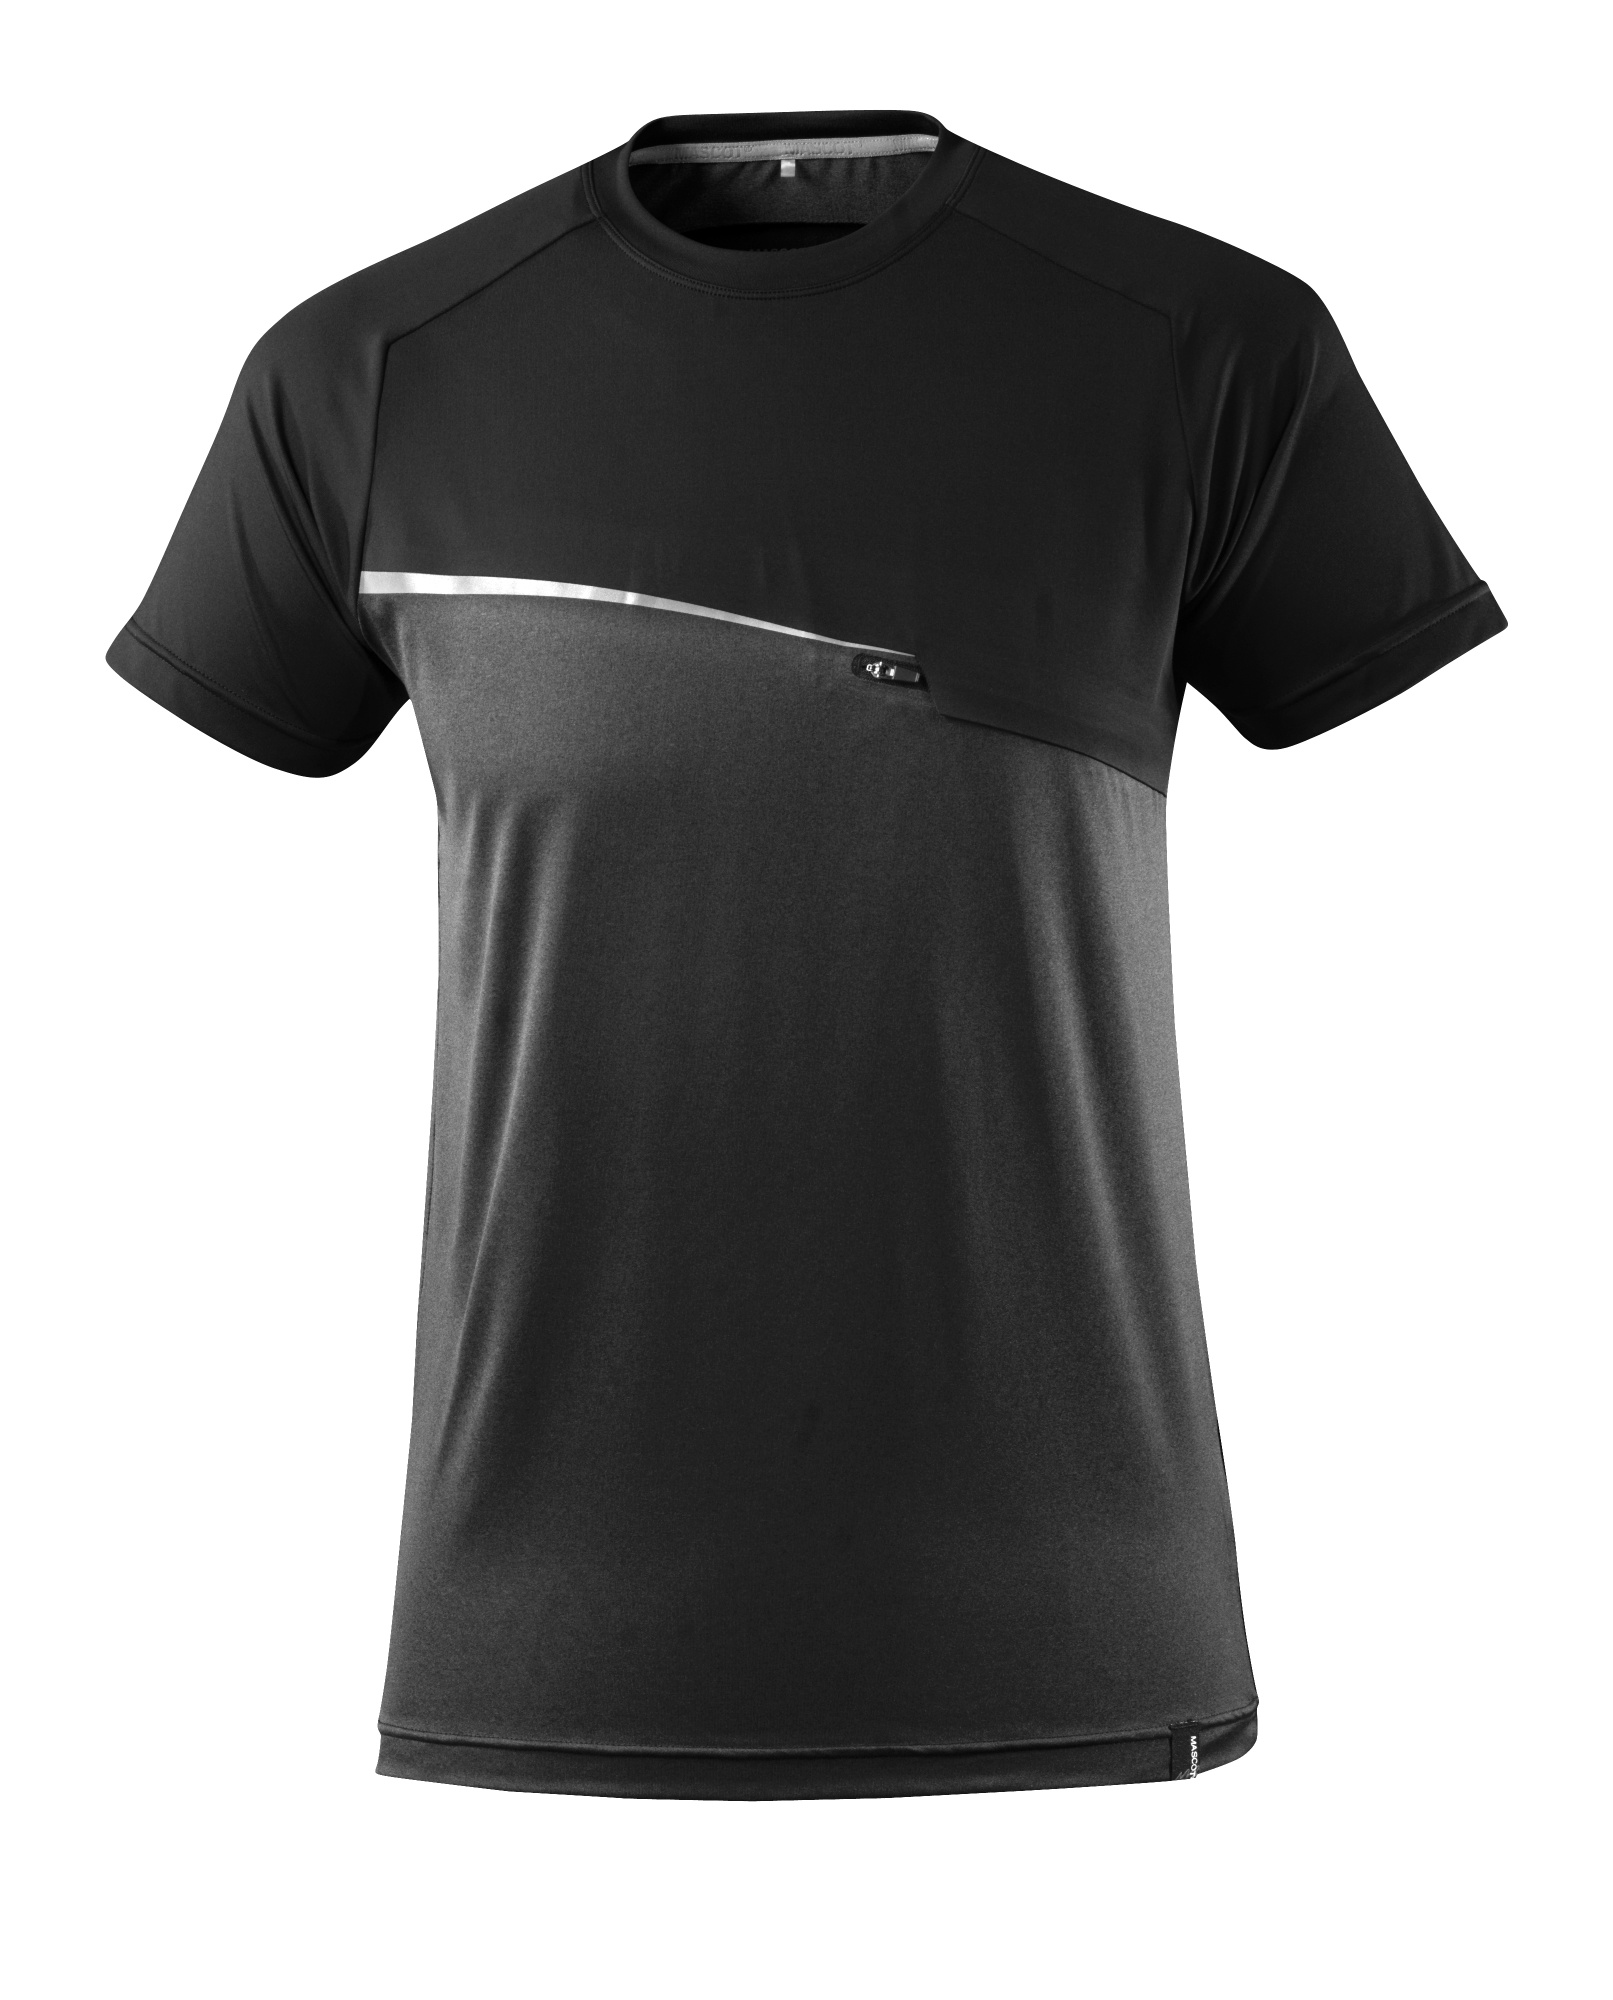 MASCOT Advanced T-Shirt Nr. 17782-945-09